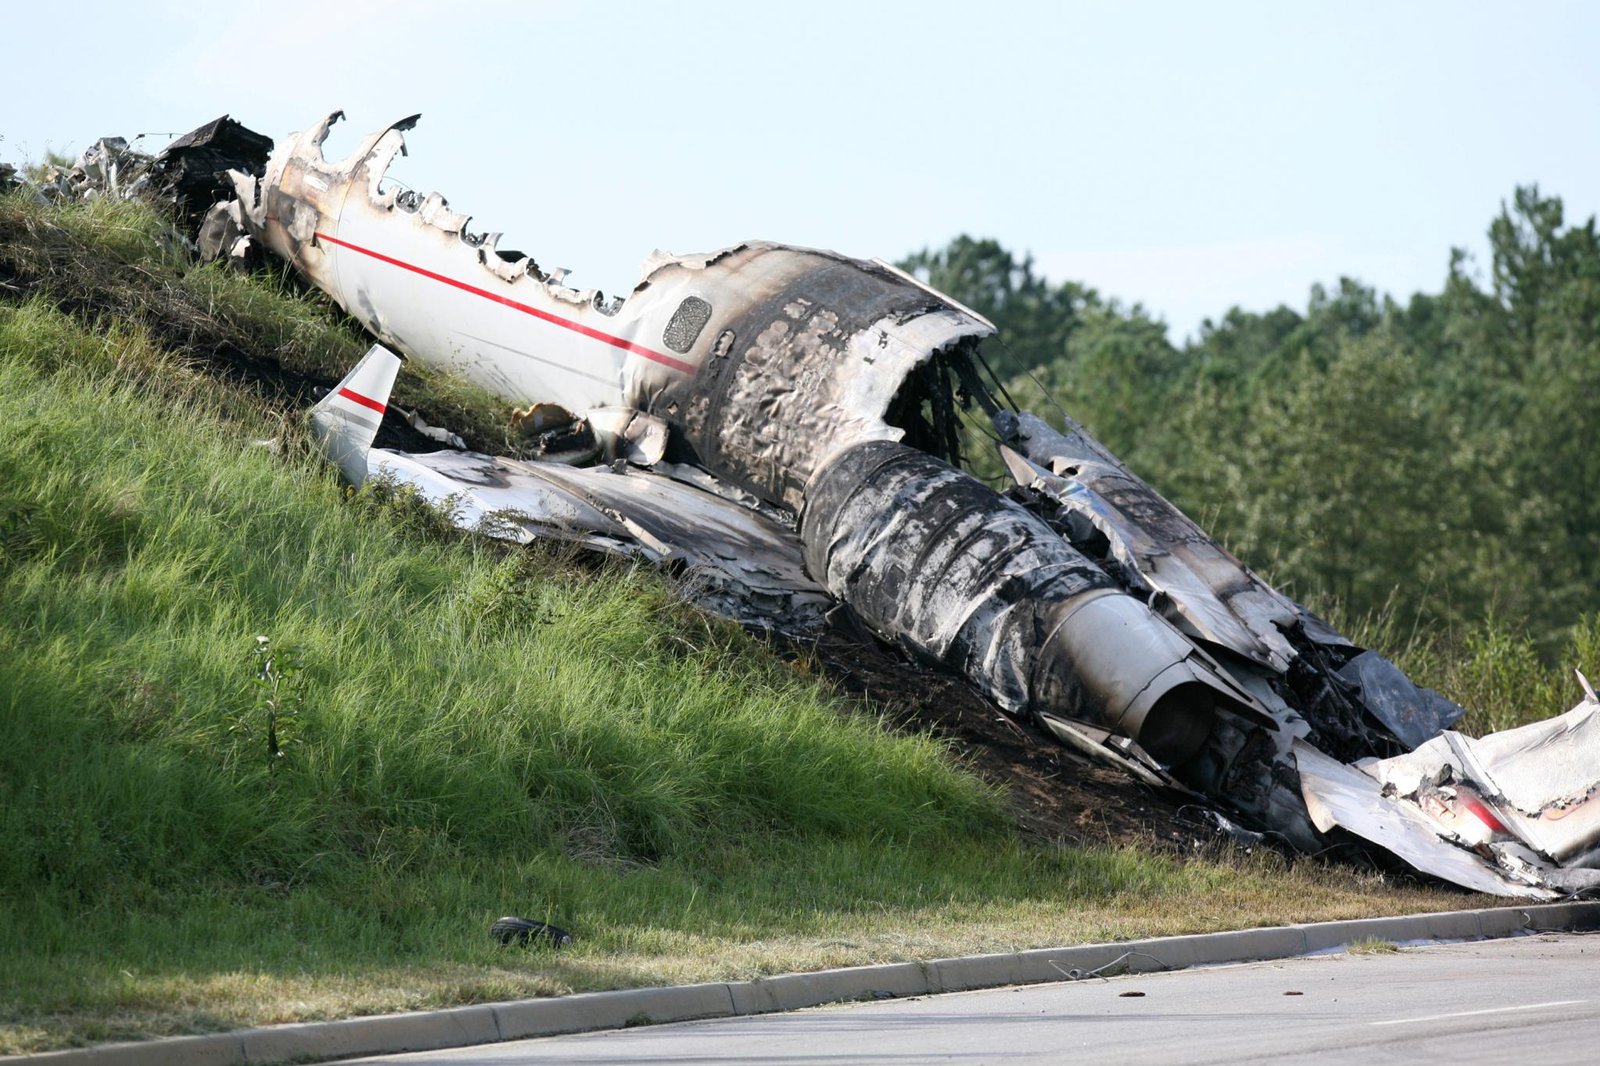 Travis Barker plane crash